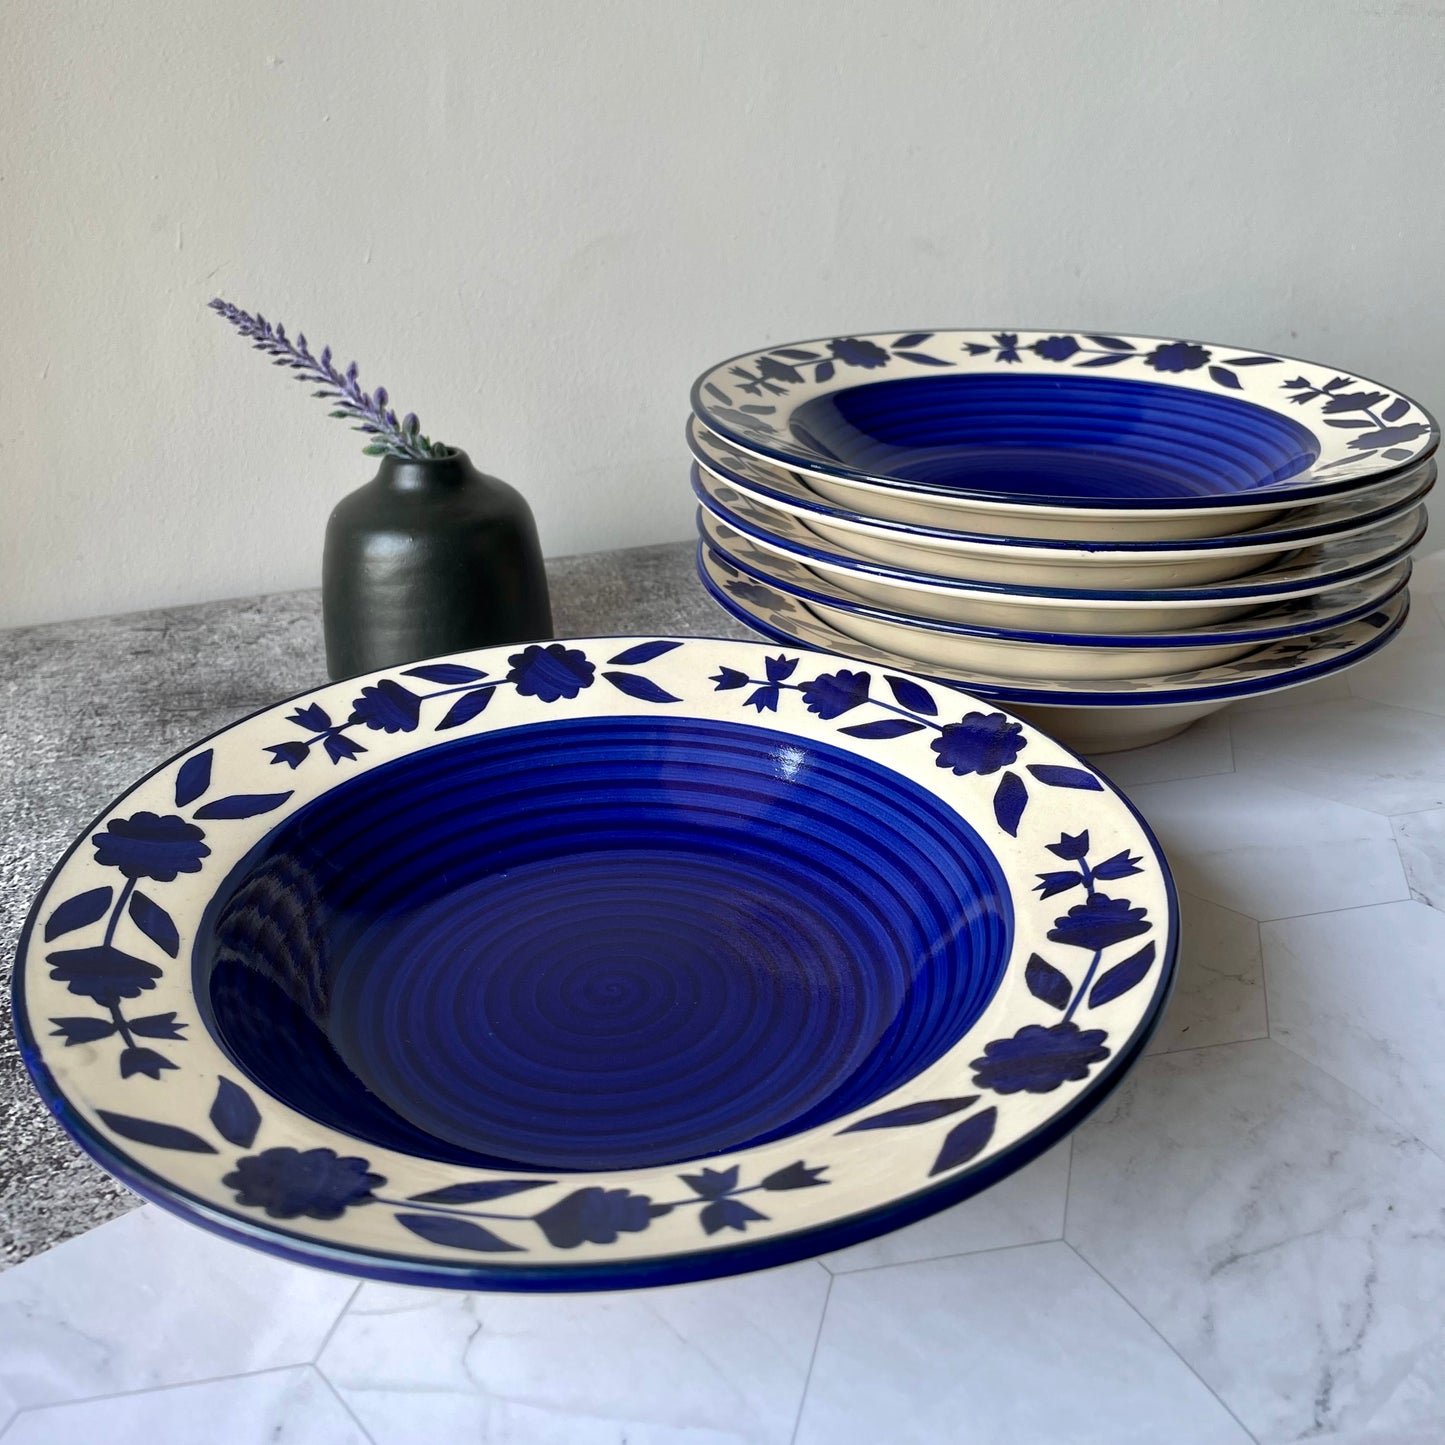 Buy Blue floral pasta plate online